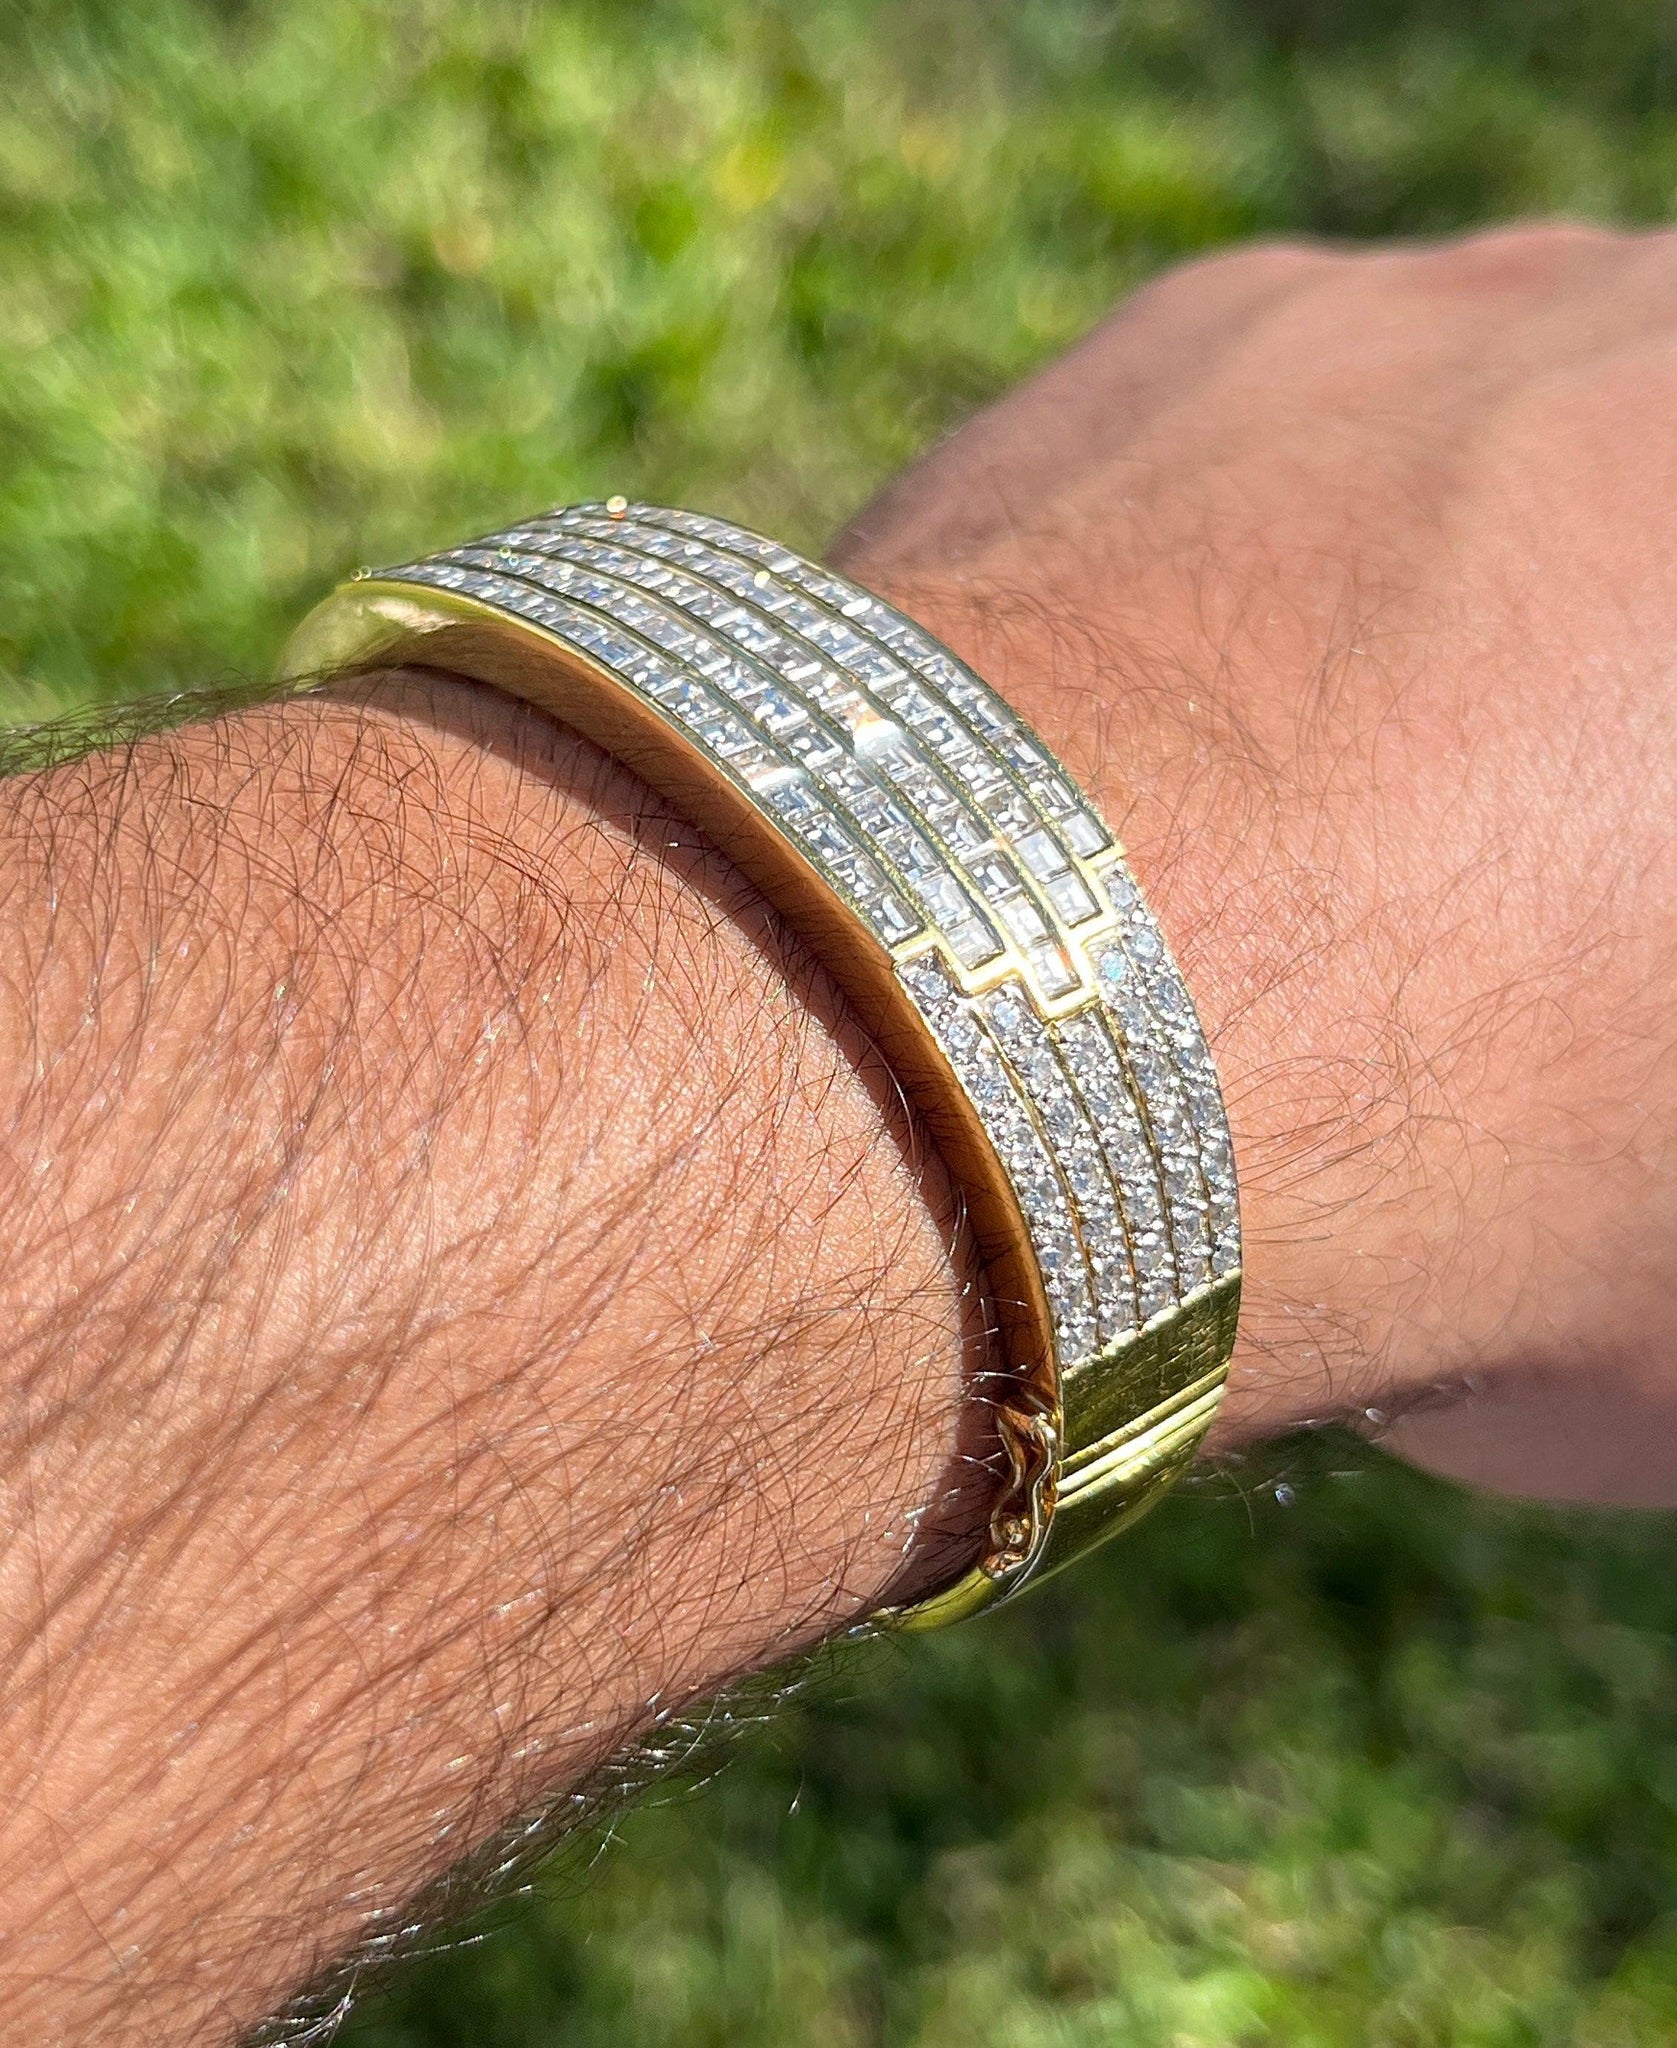 10 Carat TW Diamond Encrusted Multi Row Bangle Bracelet in 18K Yellow Gold-Bracelets-ASSAY